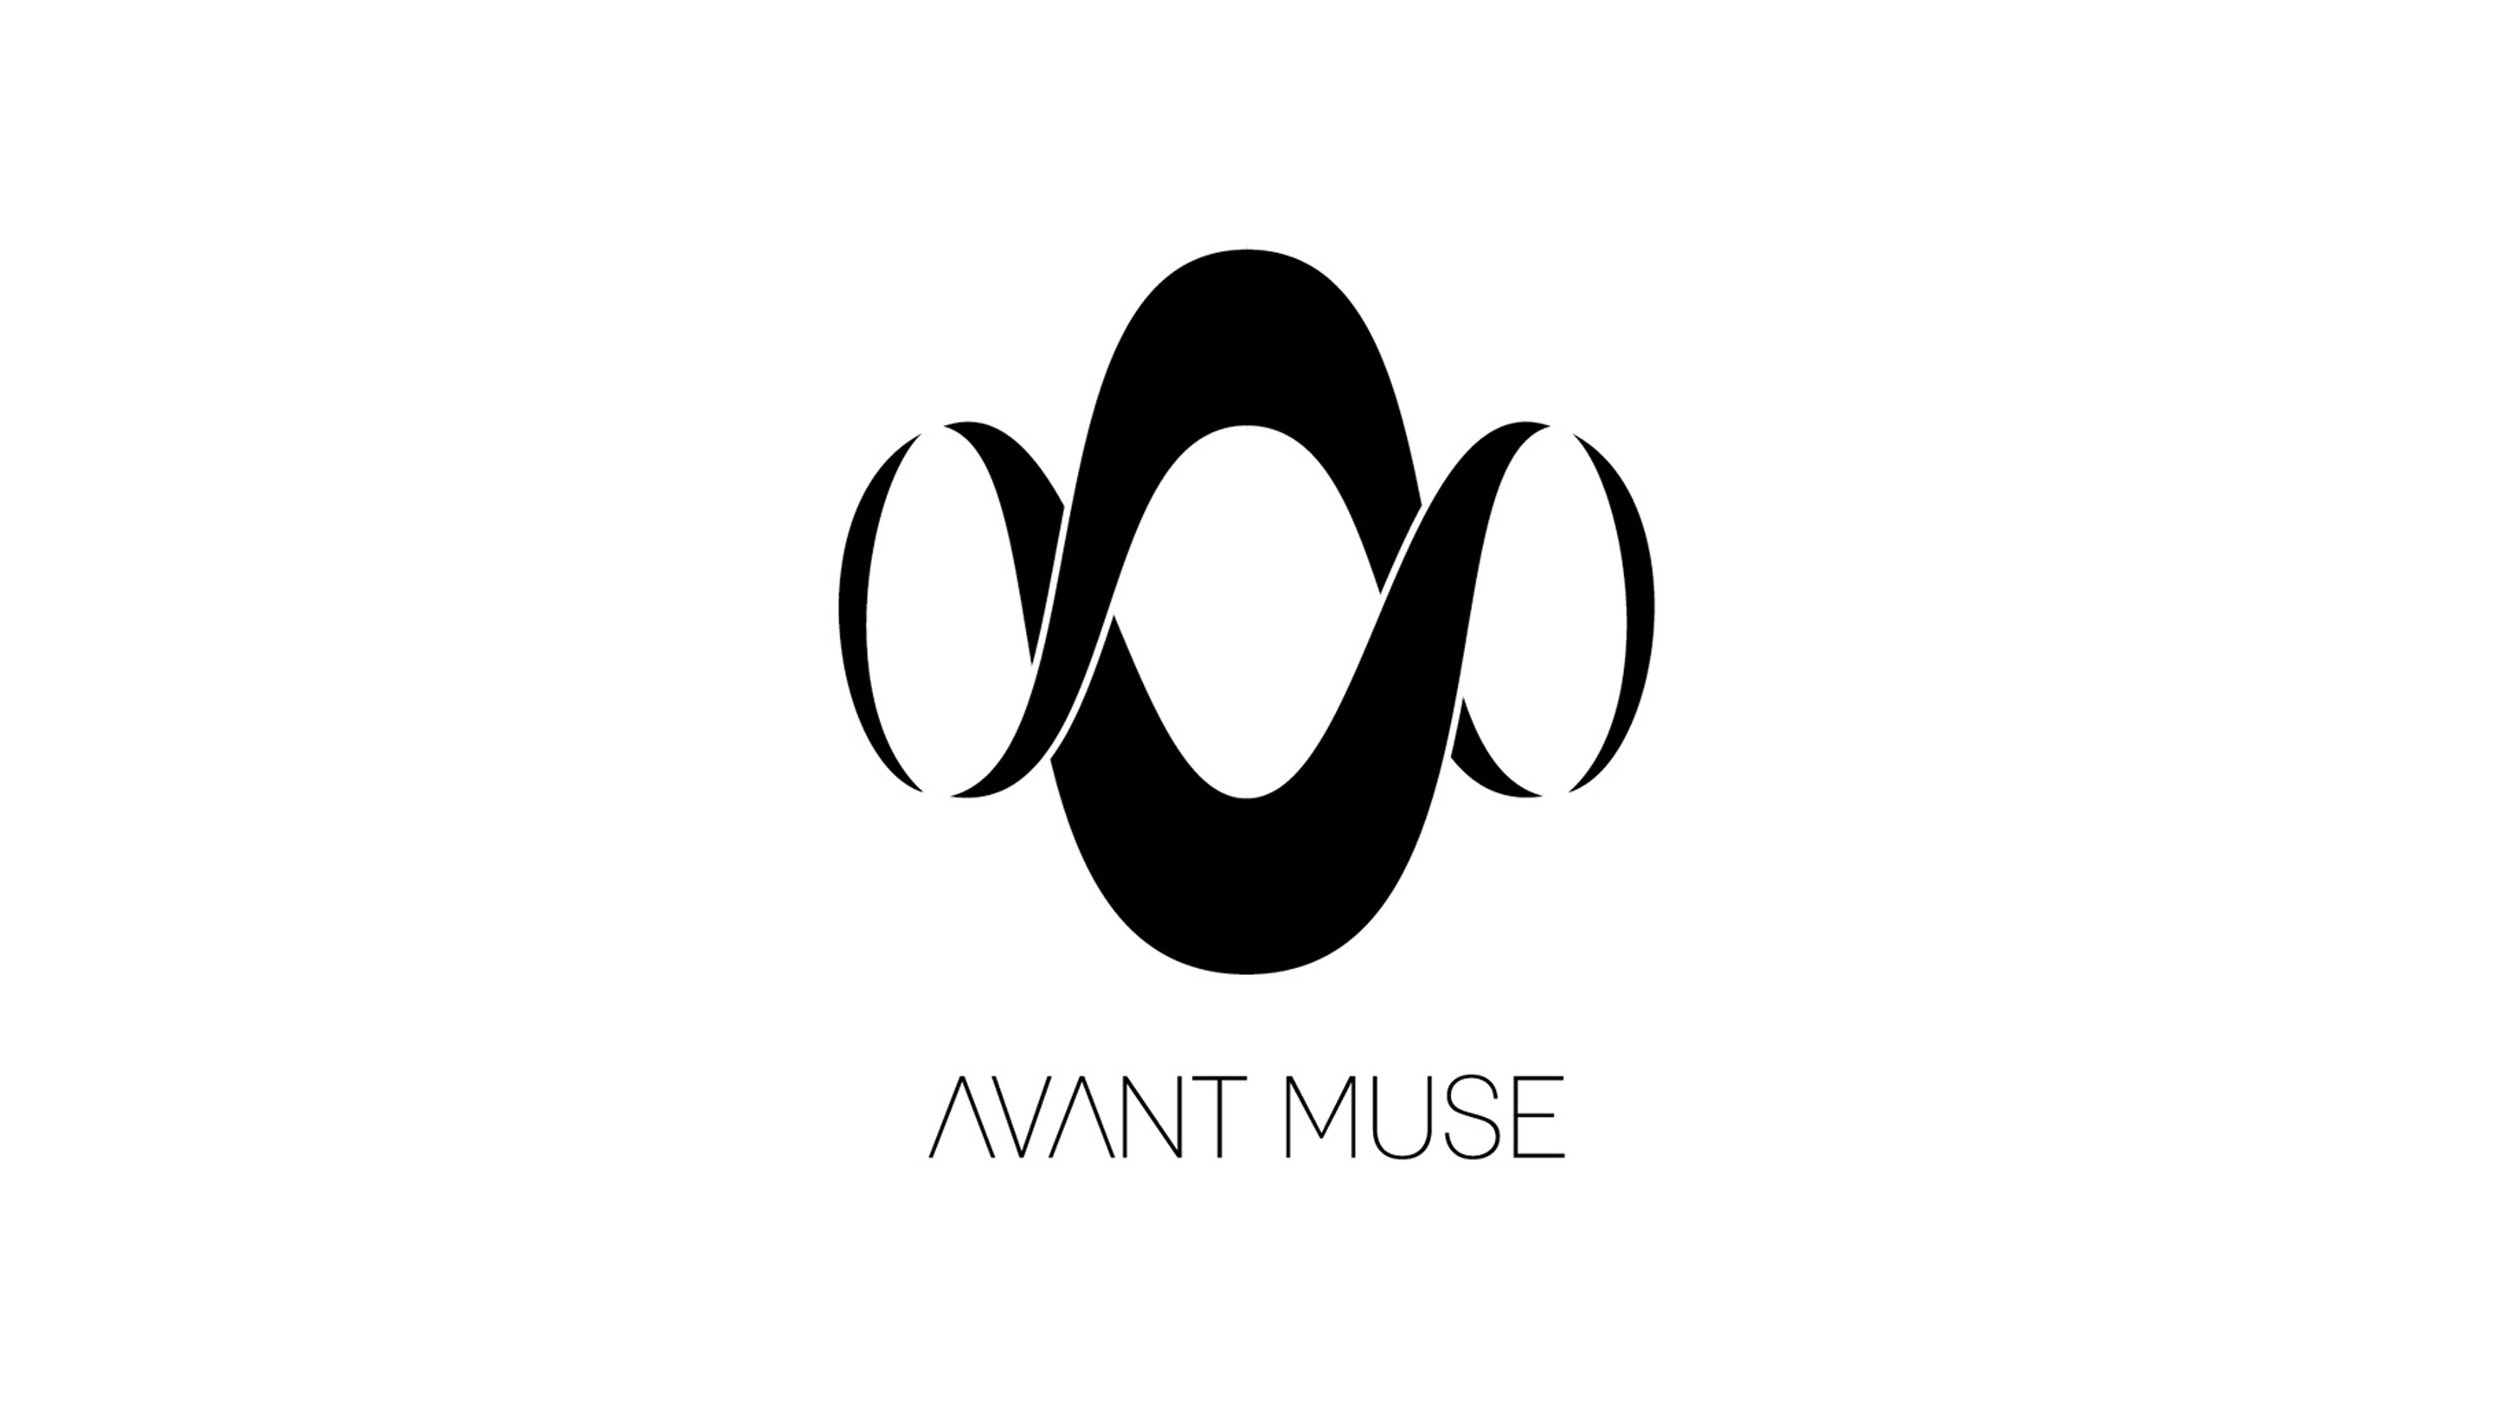 logo_id_0002_avant_muse.jpg